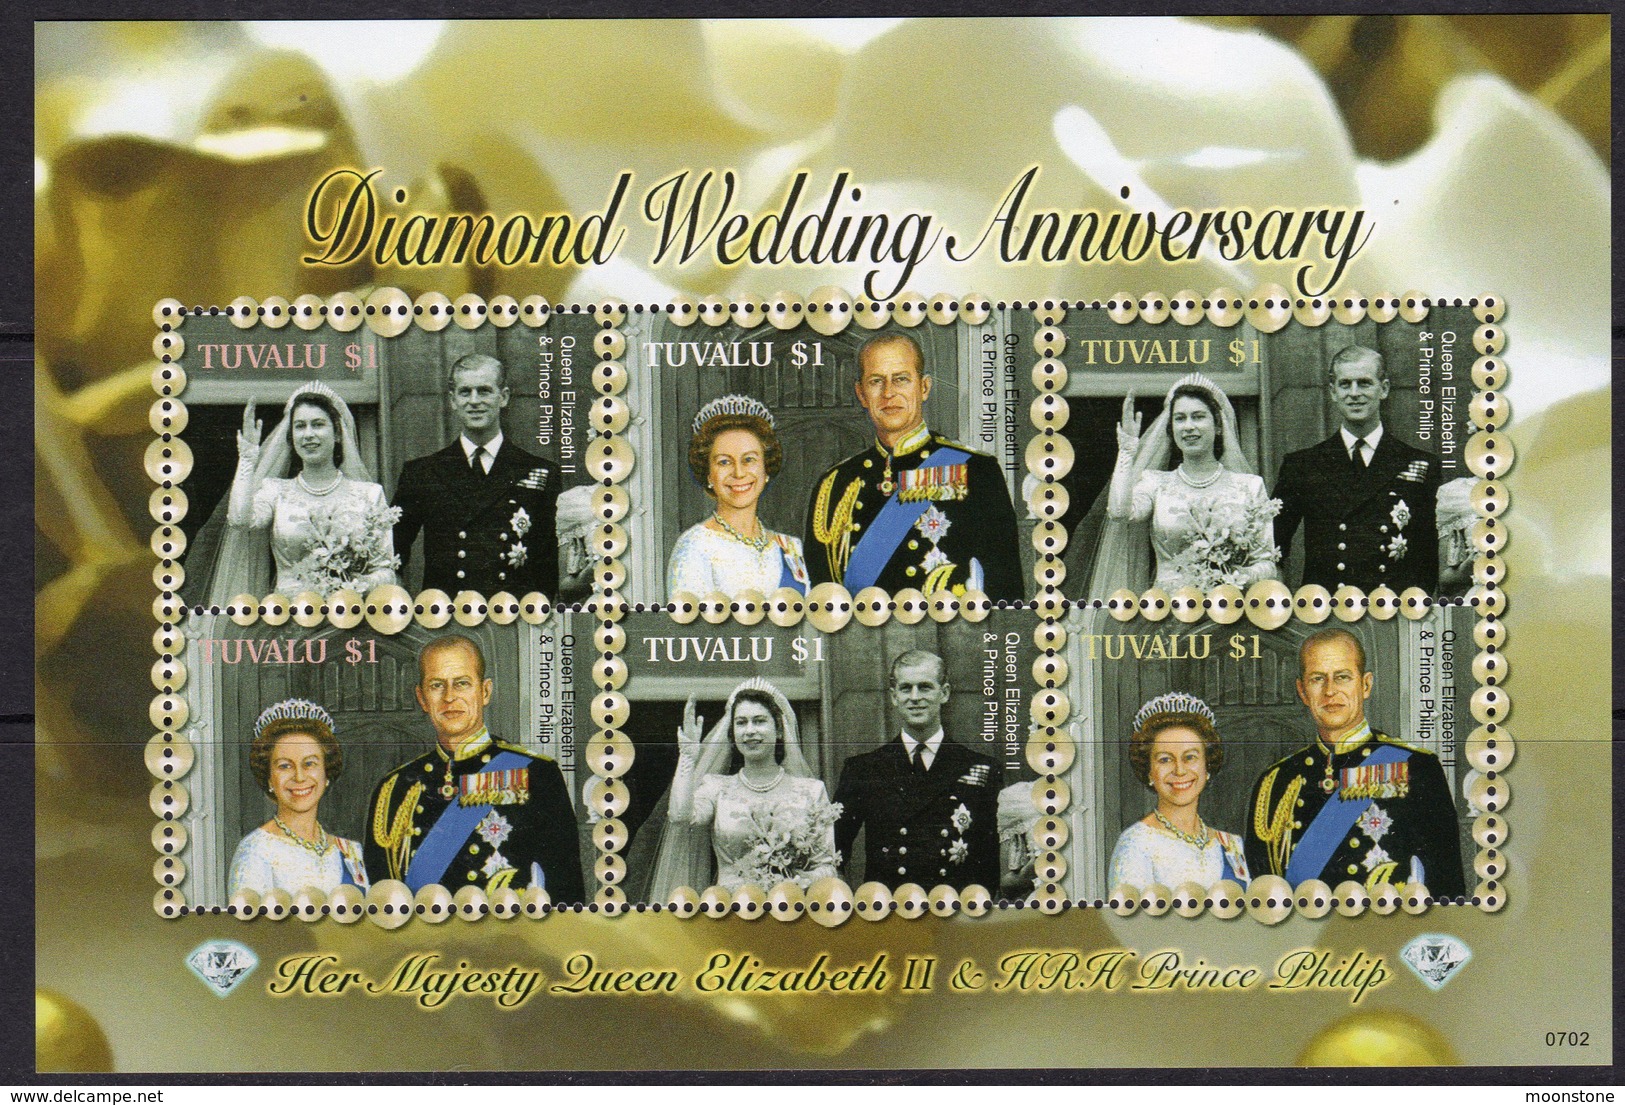 Tuvalu 2006 Royal Diamond Wedding Anniversary Sheetlet, MNH, SG 1240a (BP2) - Tuvalu